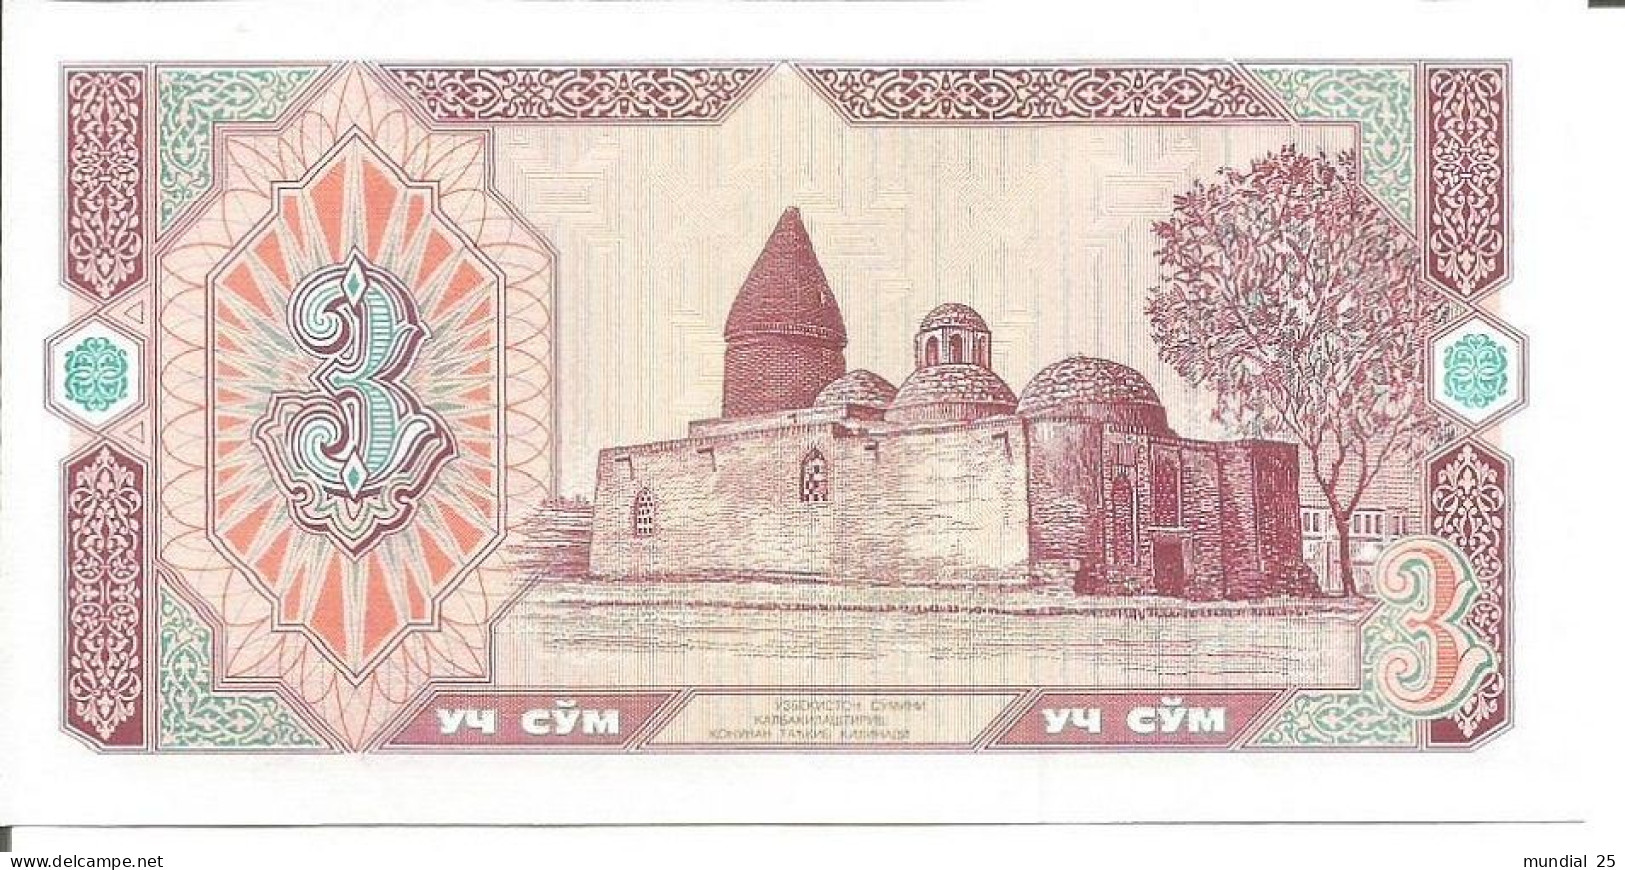 UZBEKISTAN 3 SUM 1994 - Uzbekistan